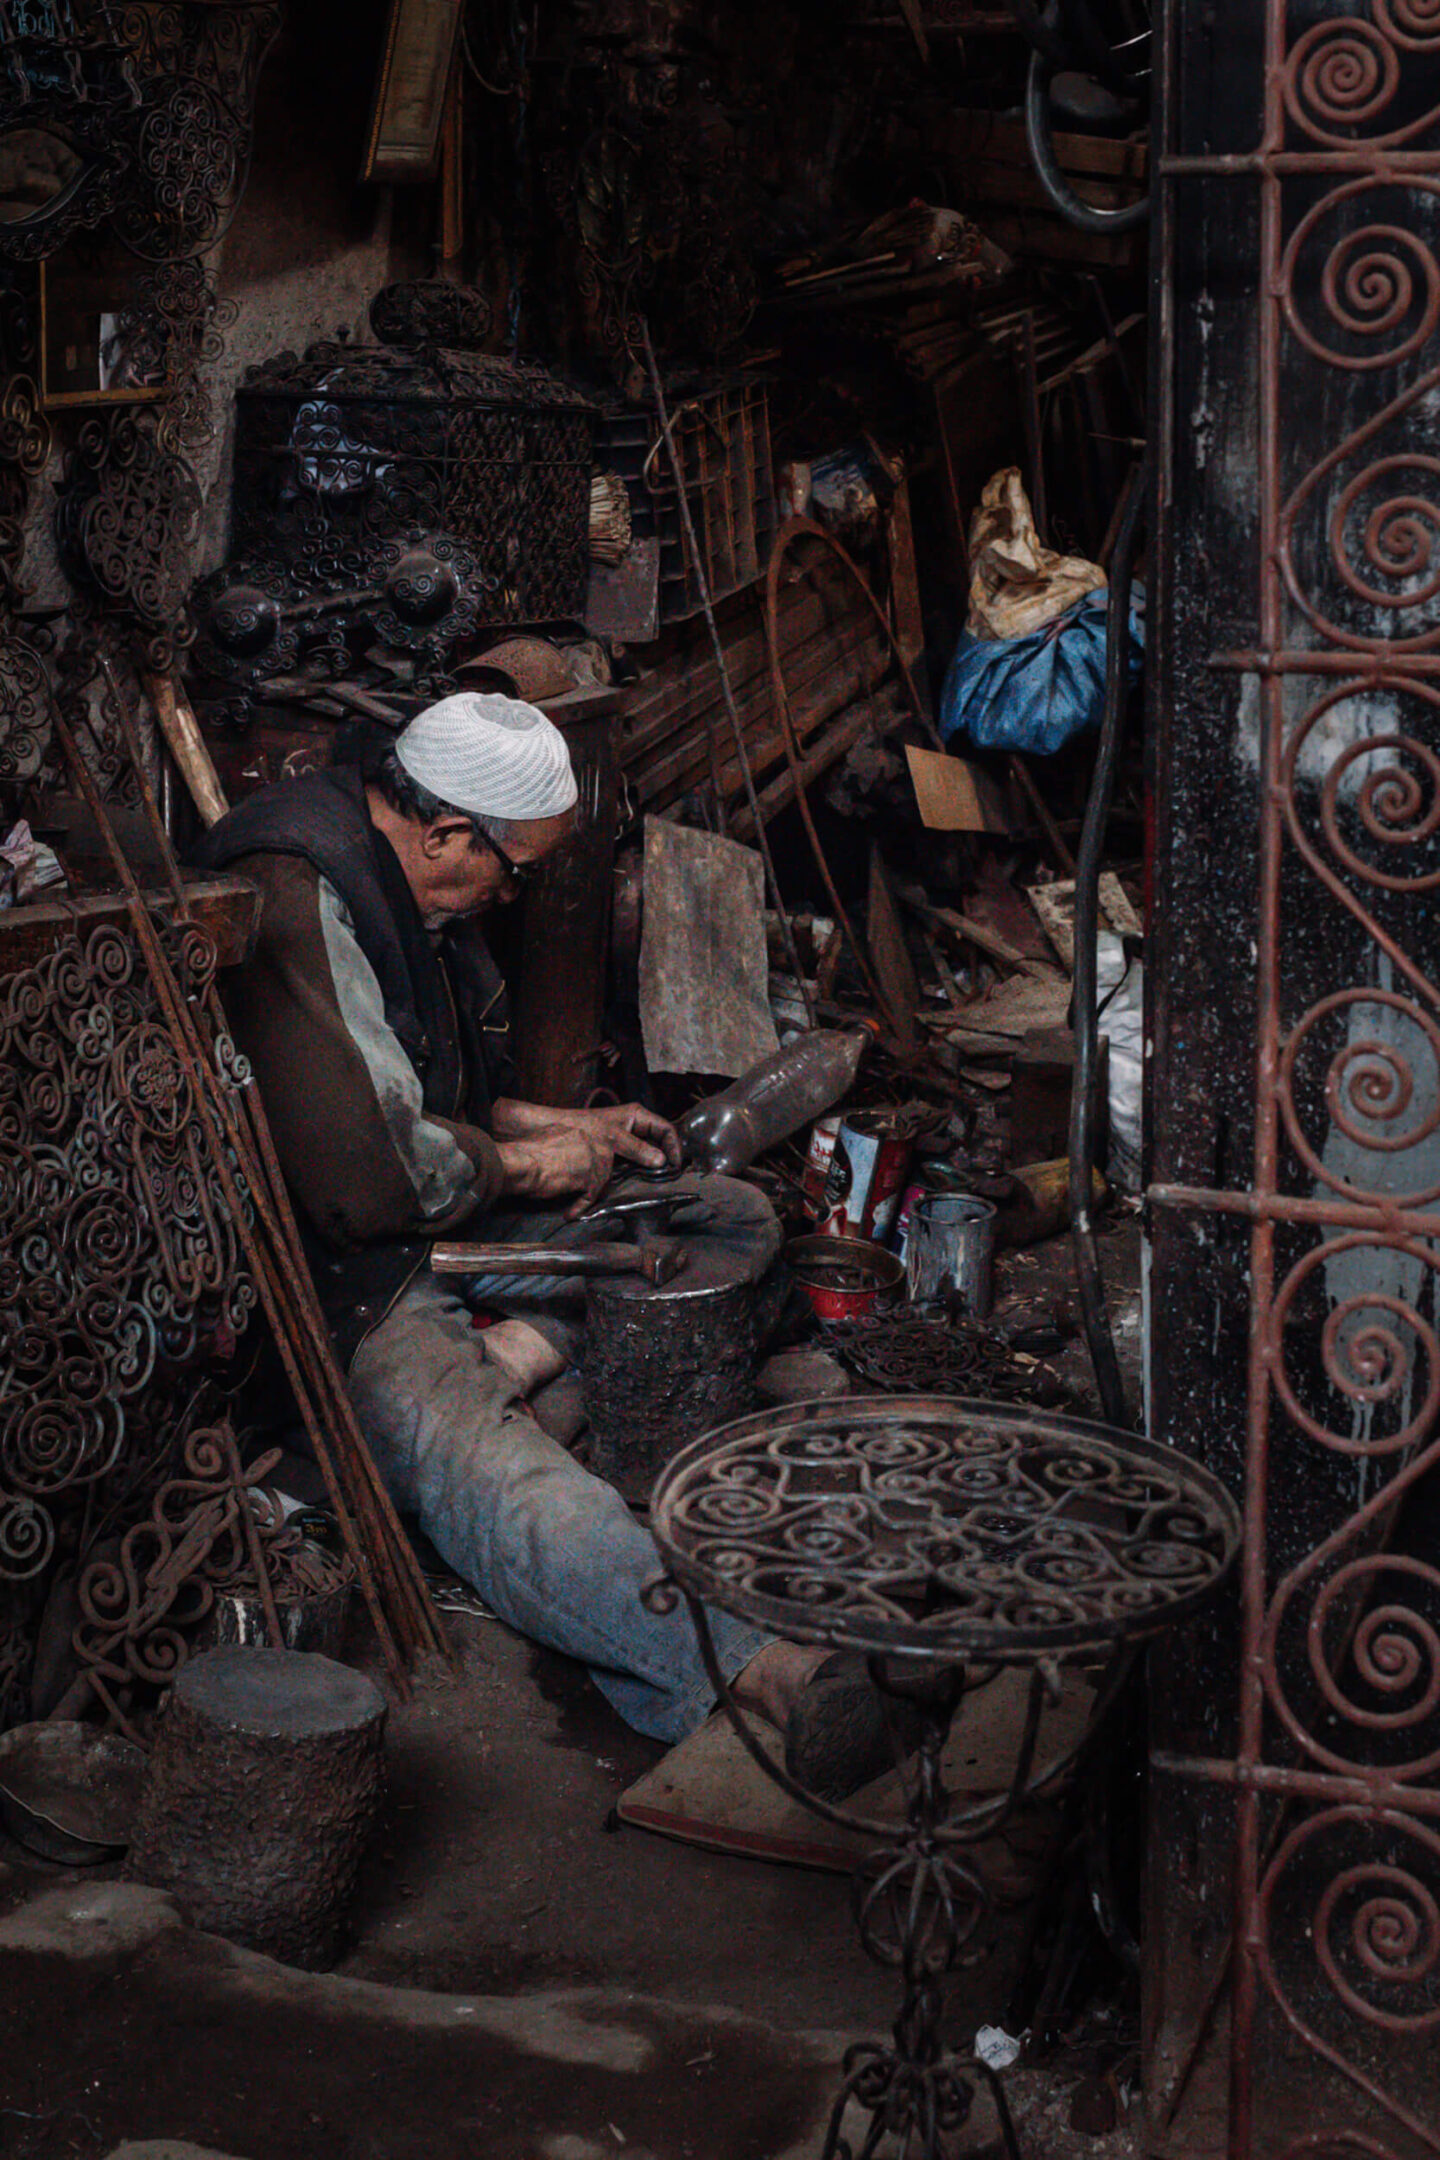 An artisan at work in the medina of Marrakech